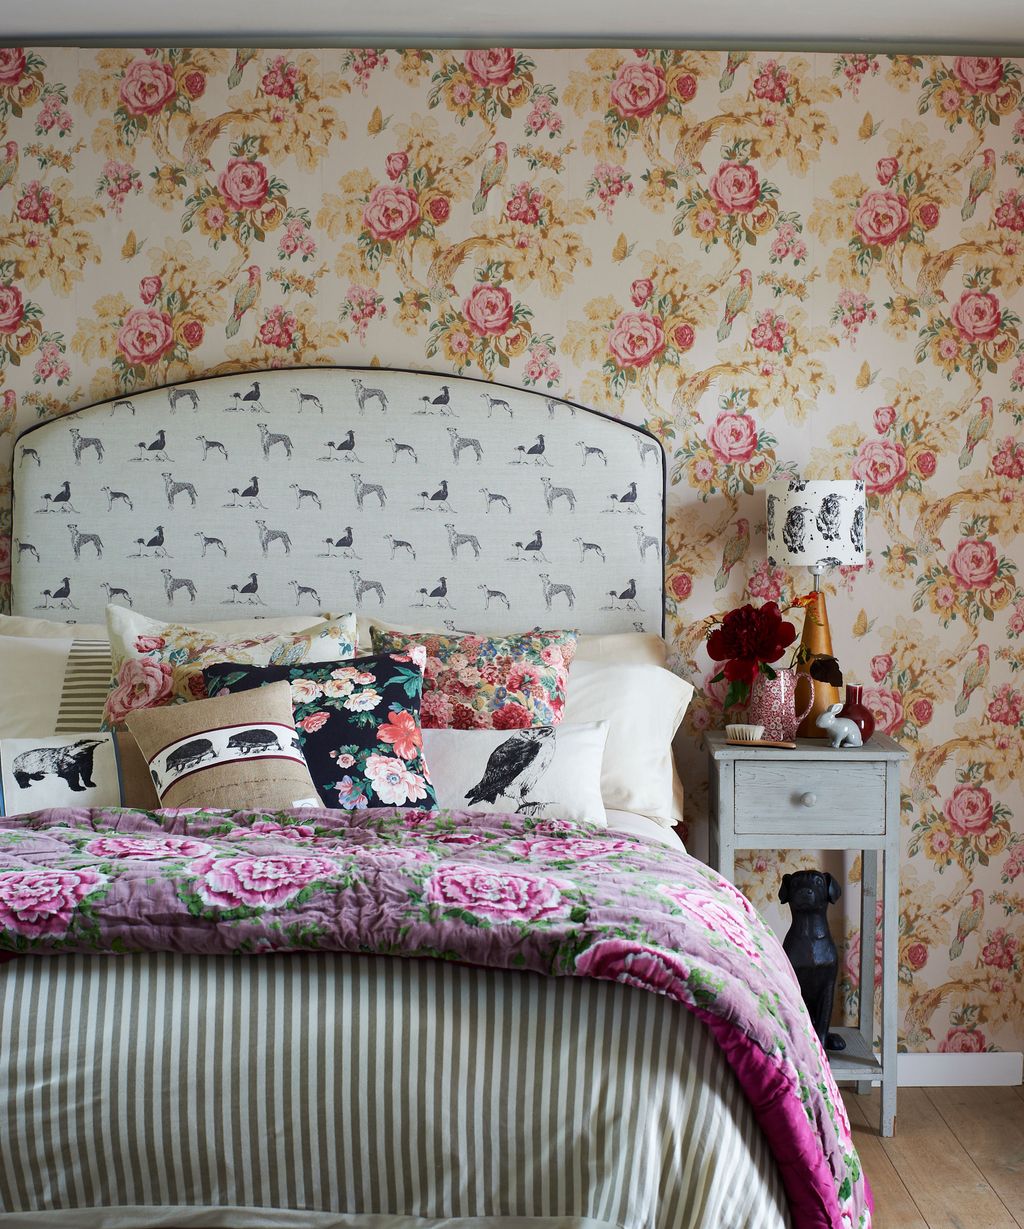 Bohemian bedroom ideas: 18 boho bedroom decorating tips